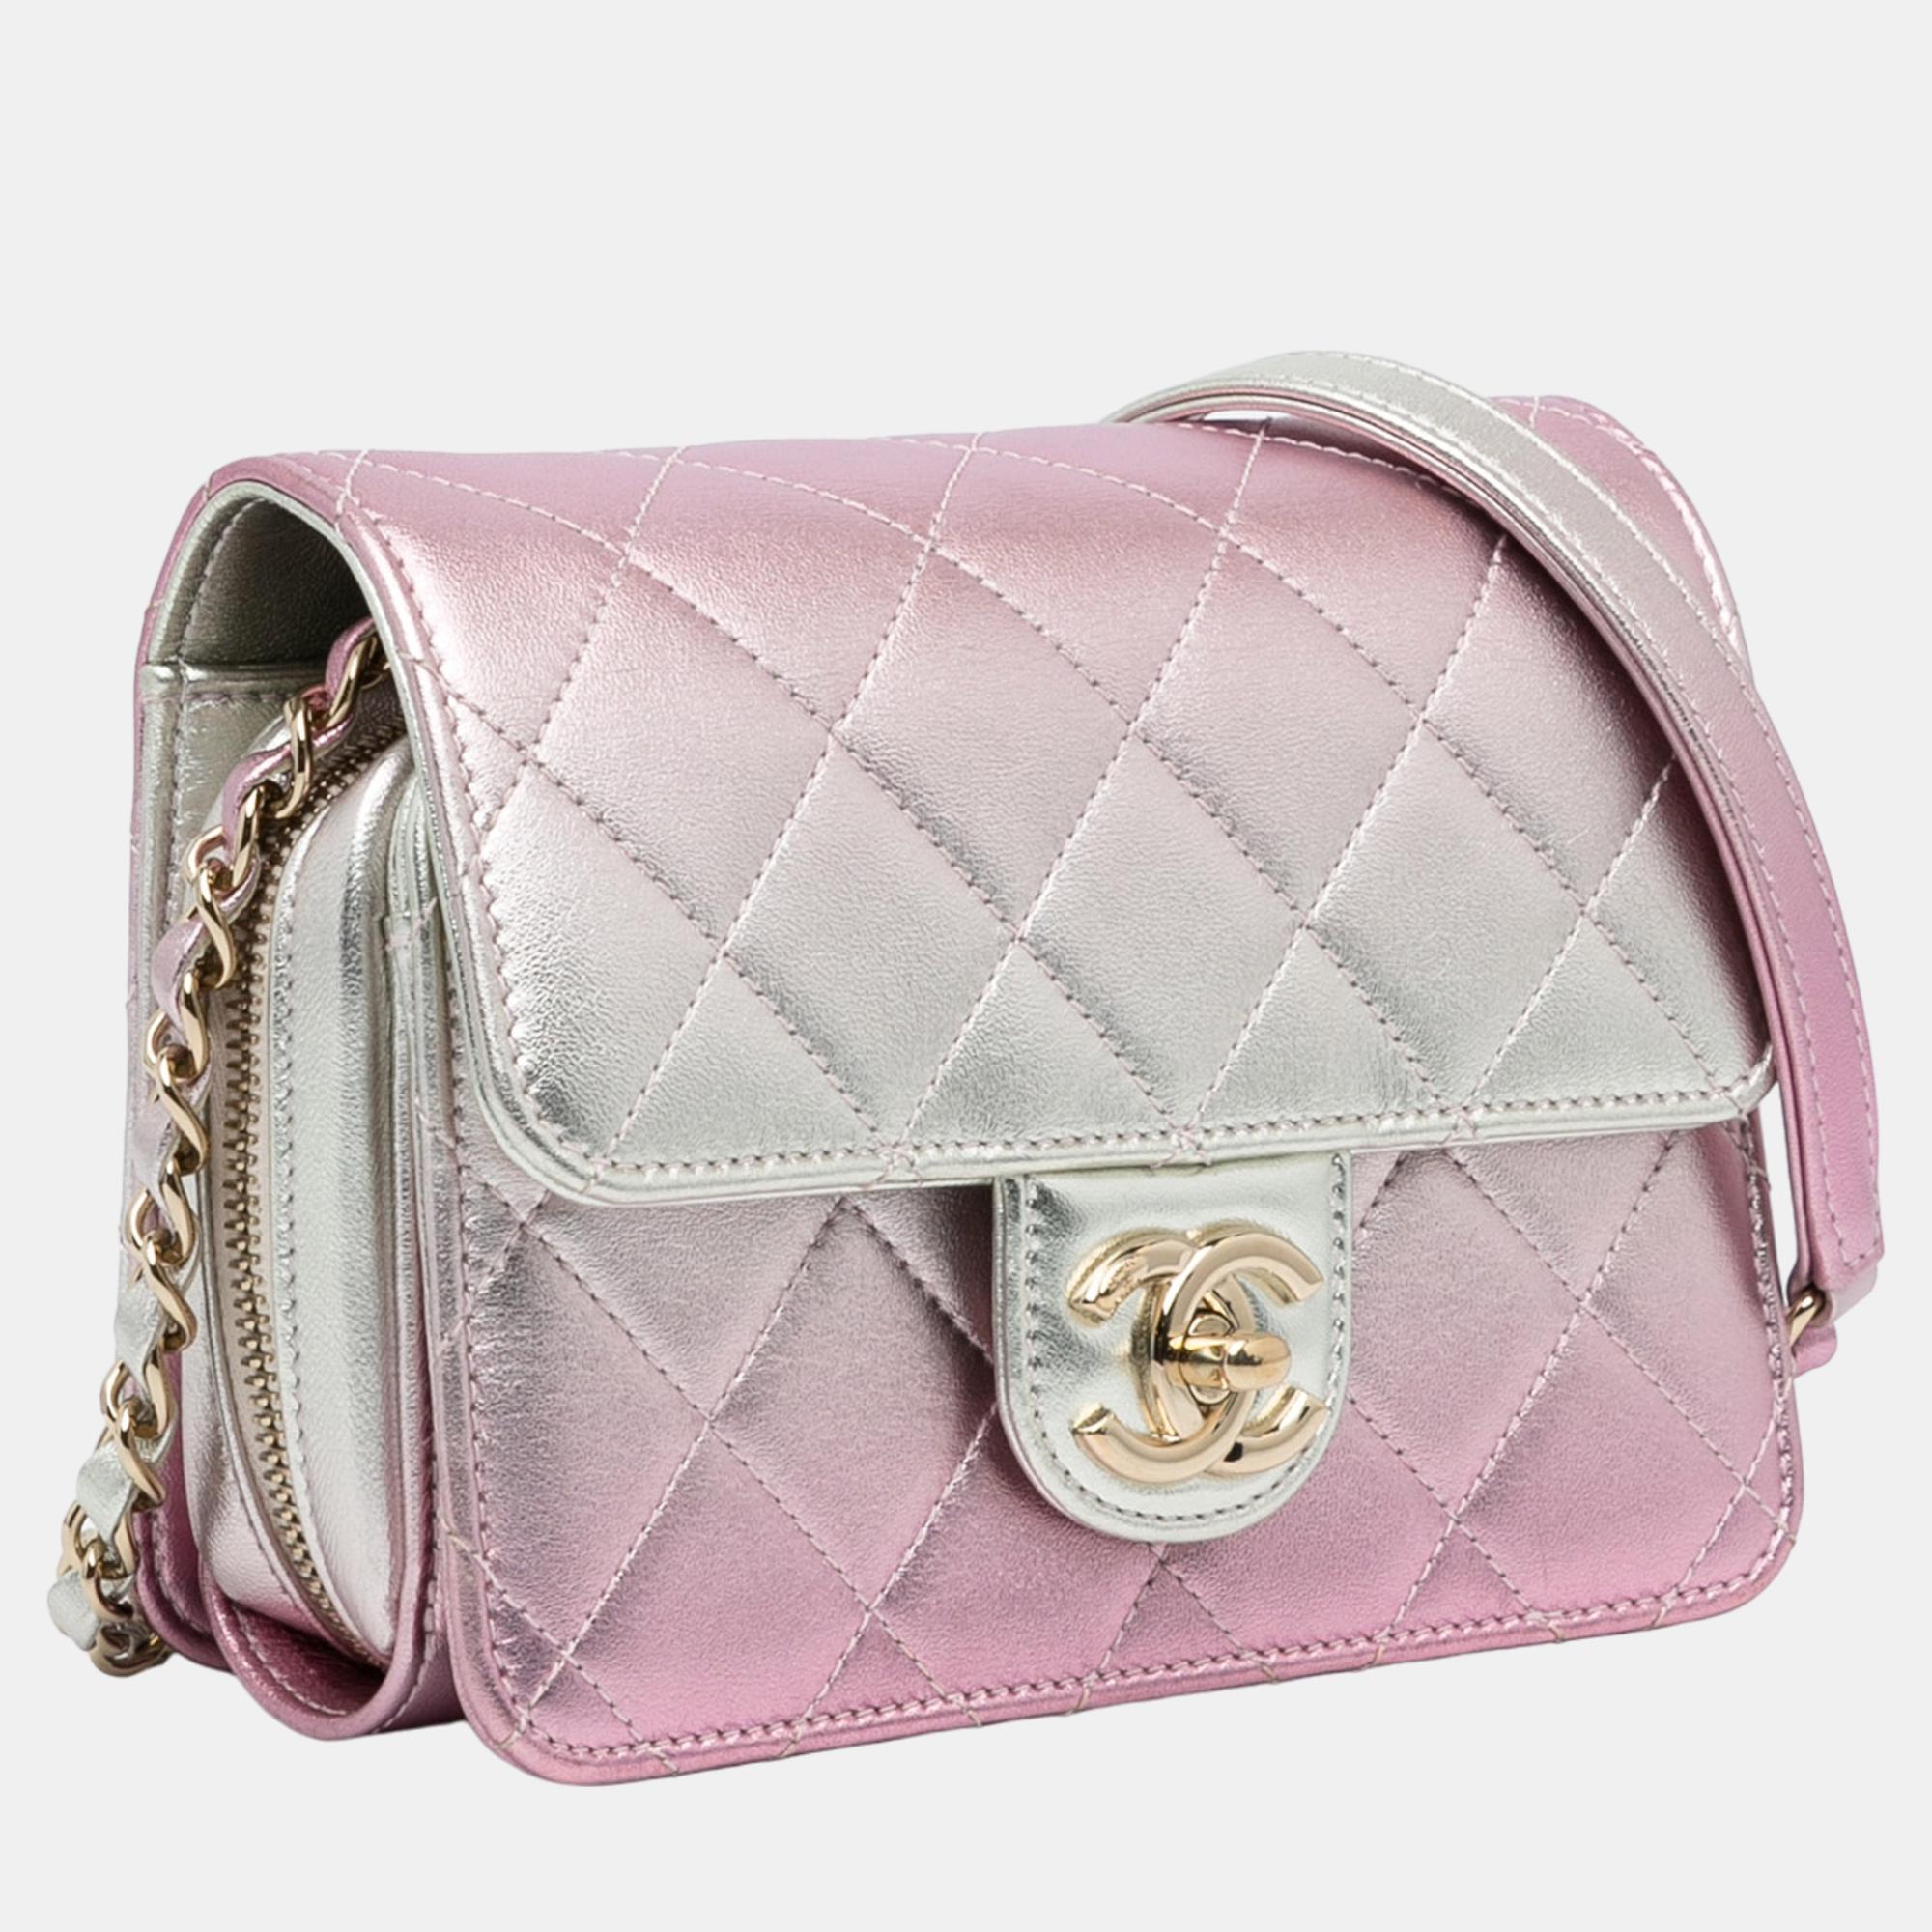 

Chanel Pink Mini Metallic Like a Wallet Flap Bag